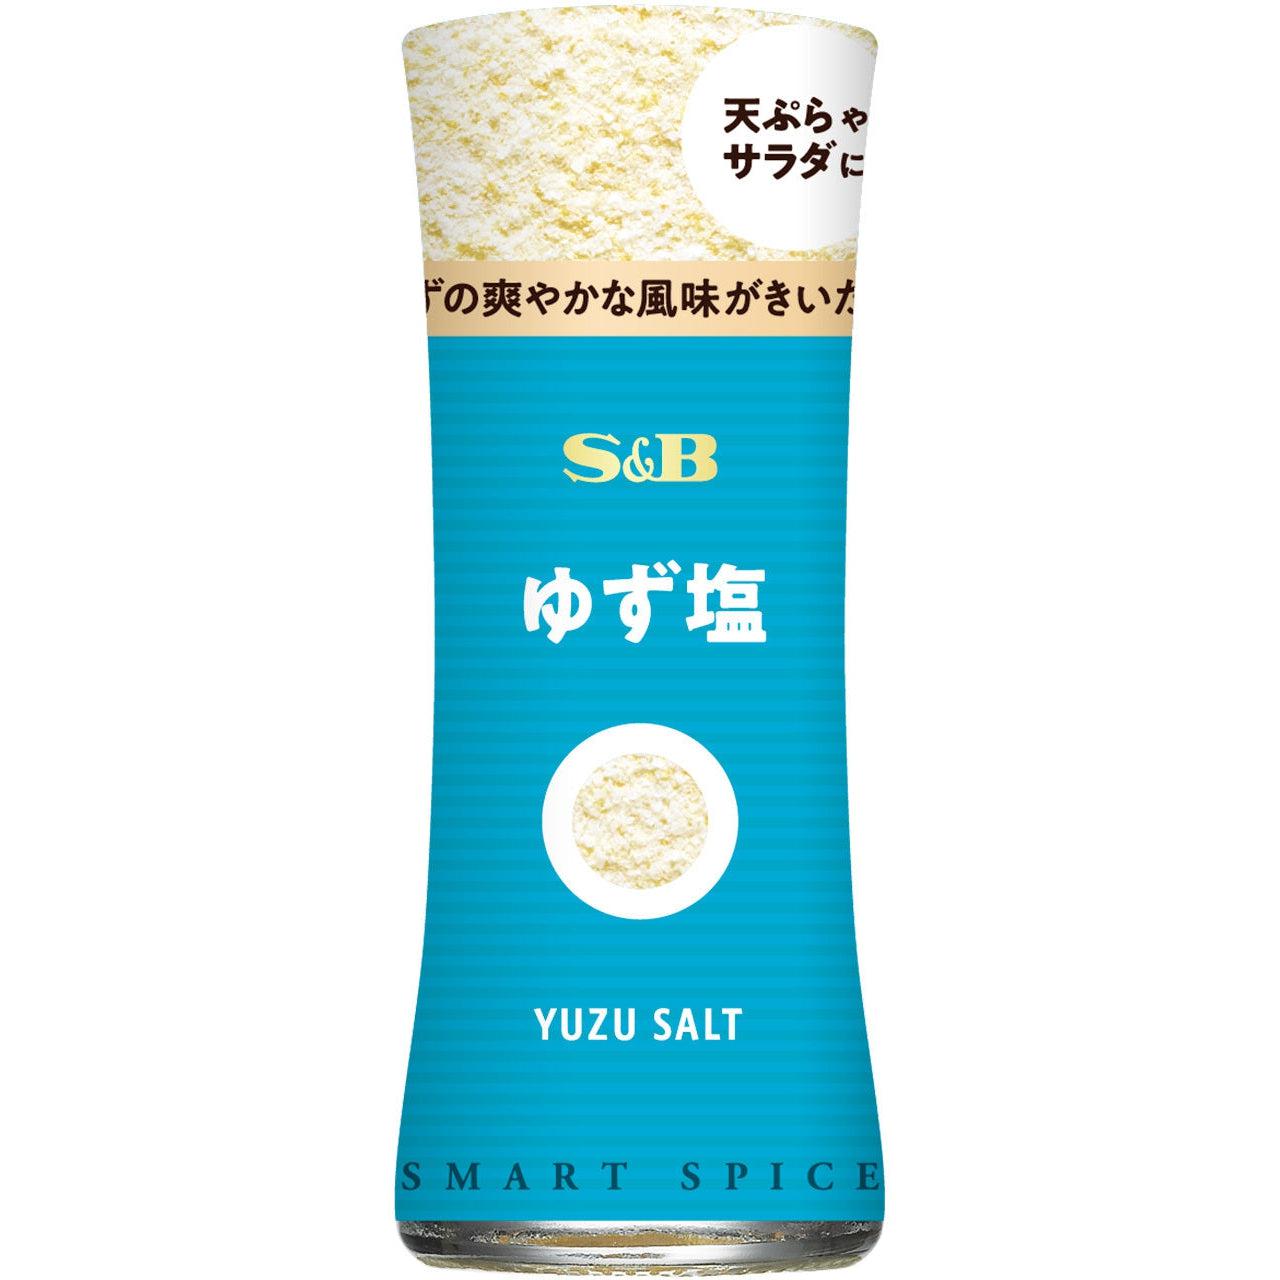 S&B Smart Spice Yuzu Citron Salt 16g, Japanese Taste